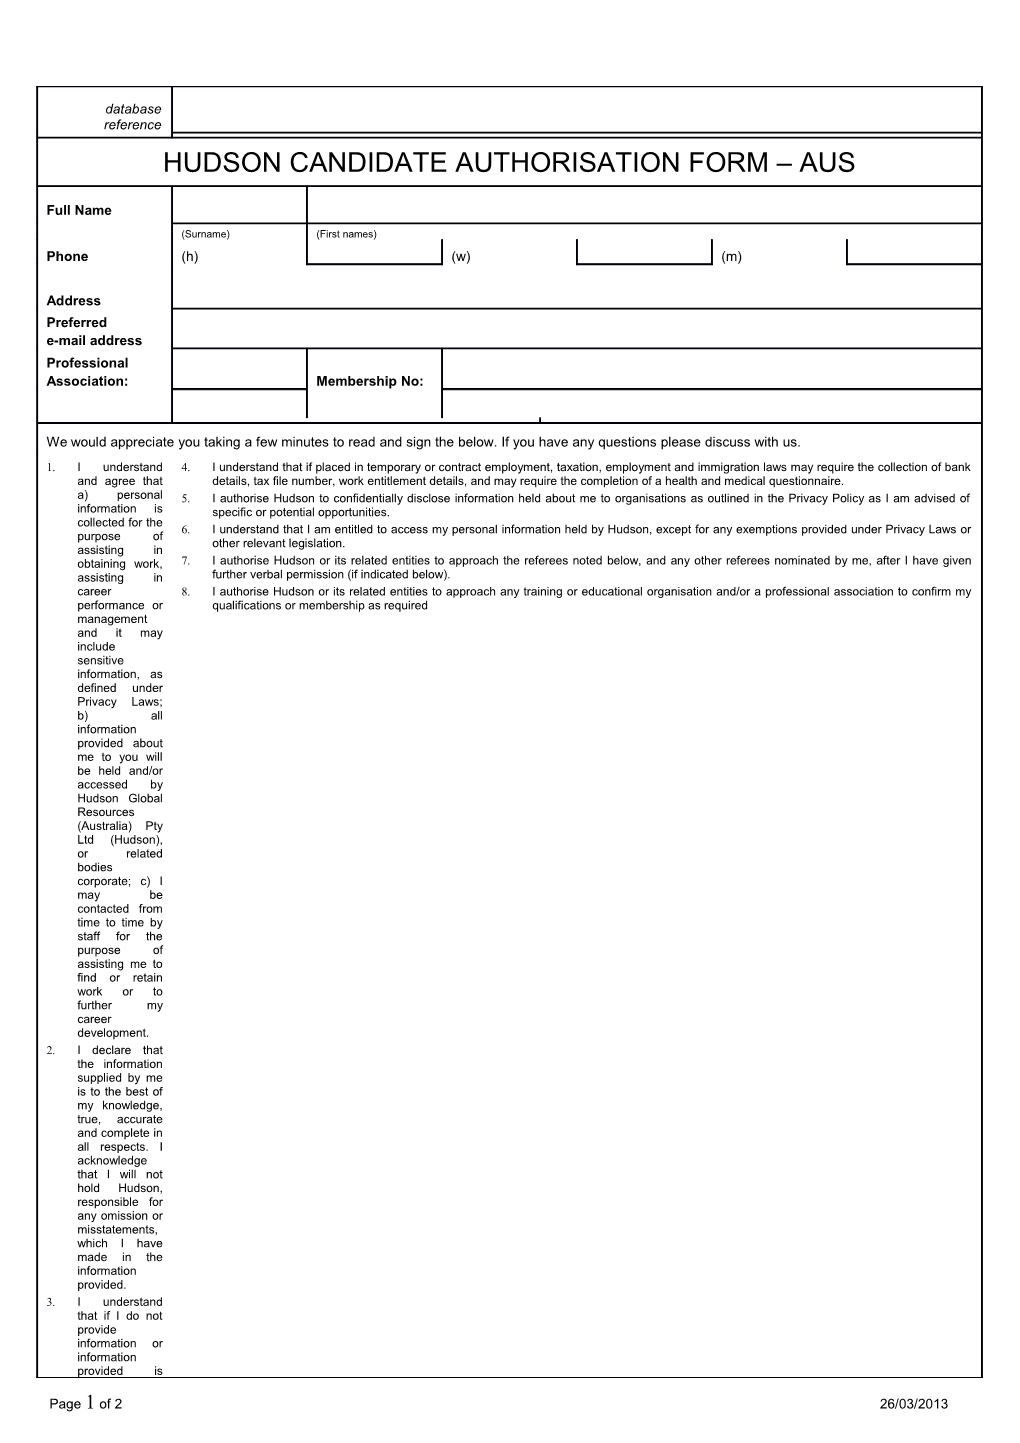 Candidate Authorisation Form - AUS